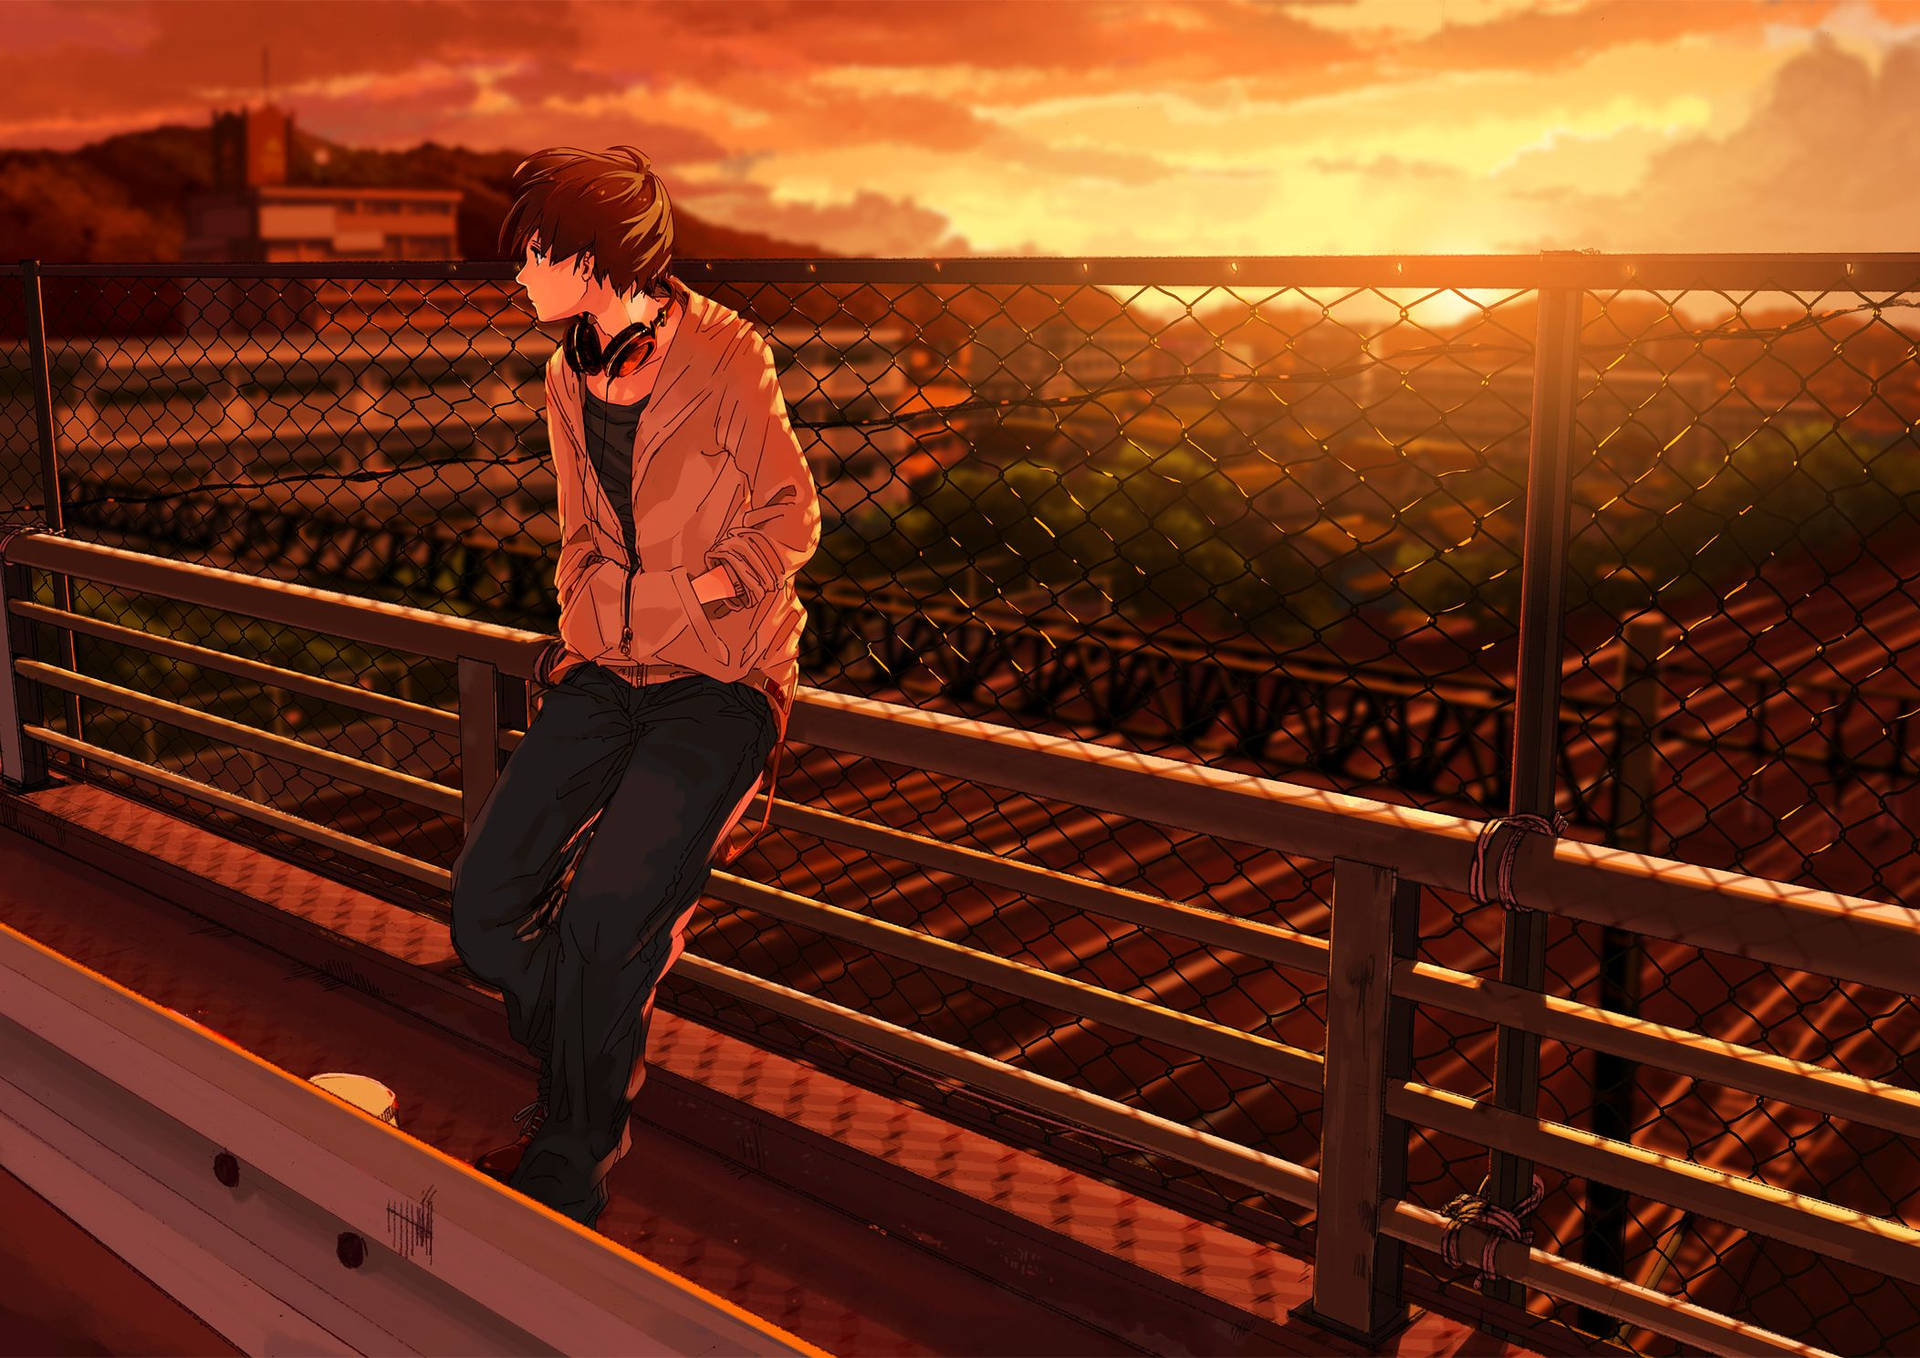 Sad Anime 2104X1488 Wallpaper and Background Image